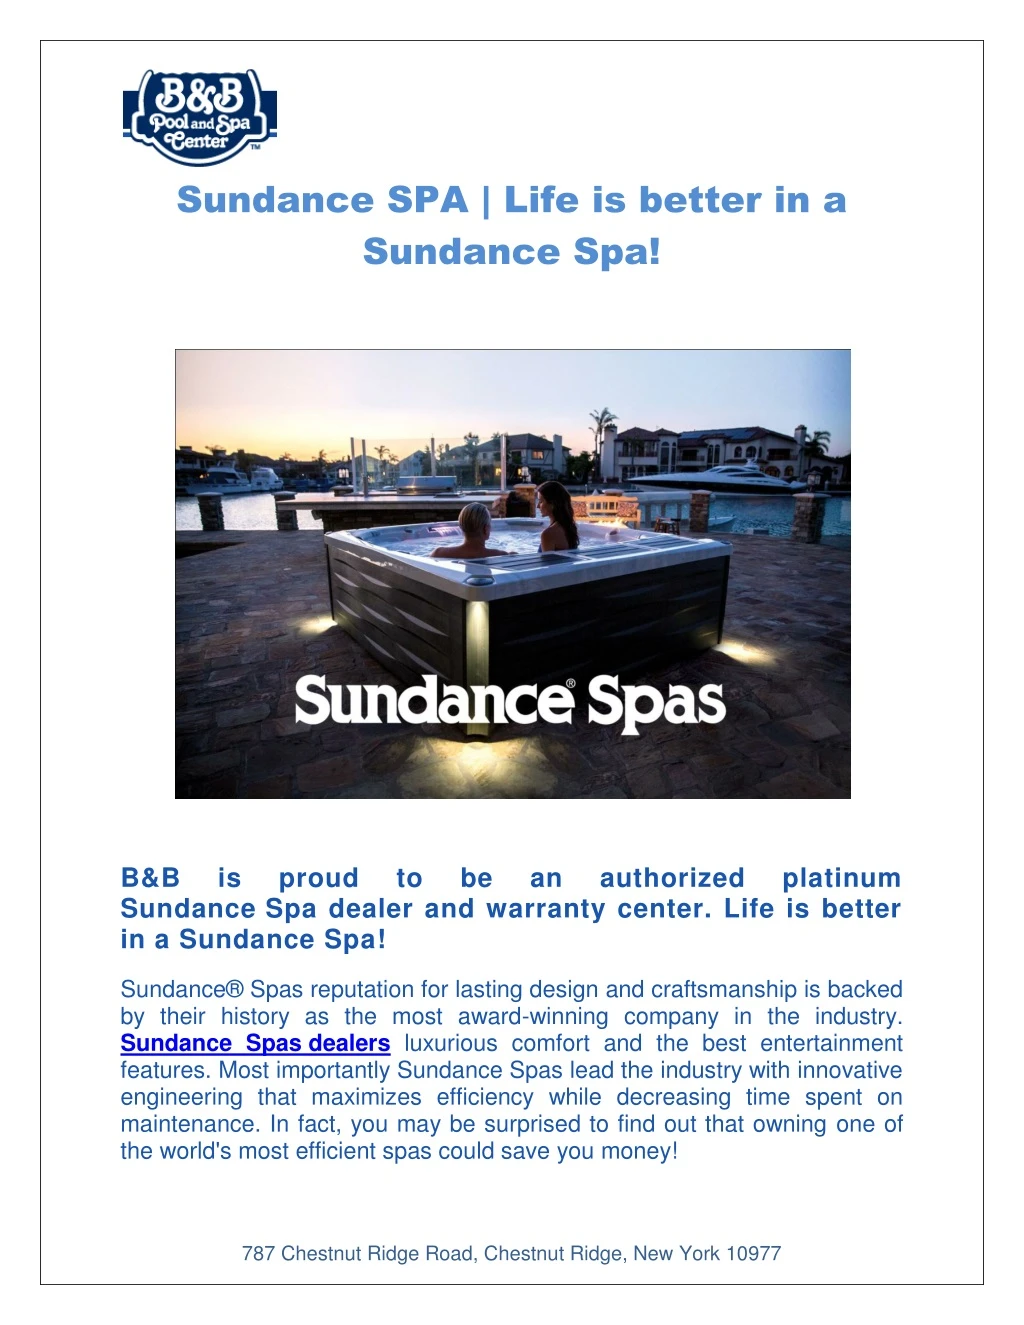 sundance spa life is better in a sundance spa